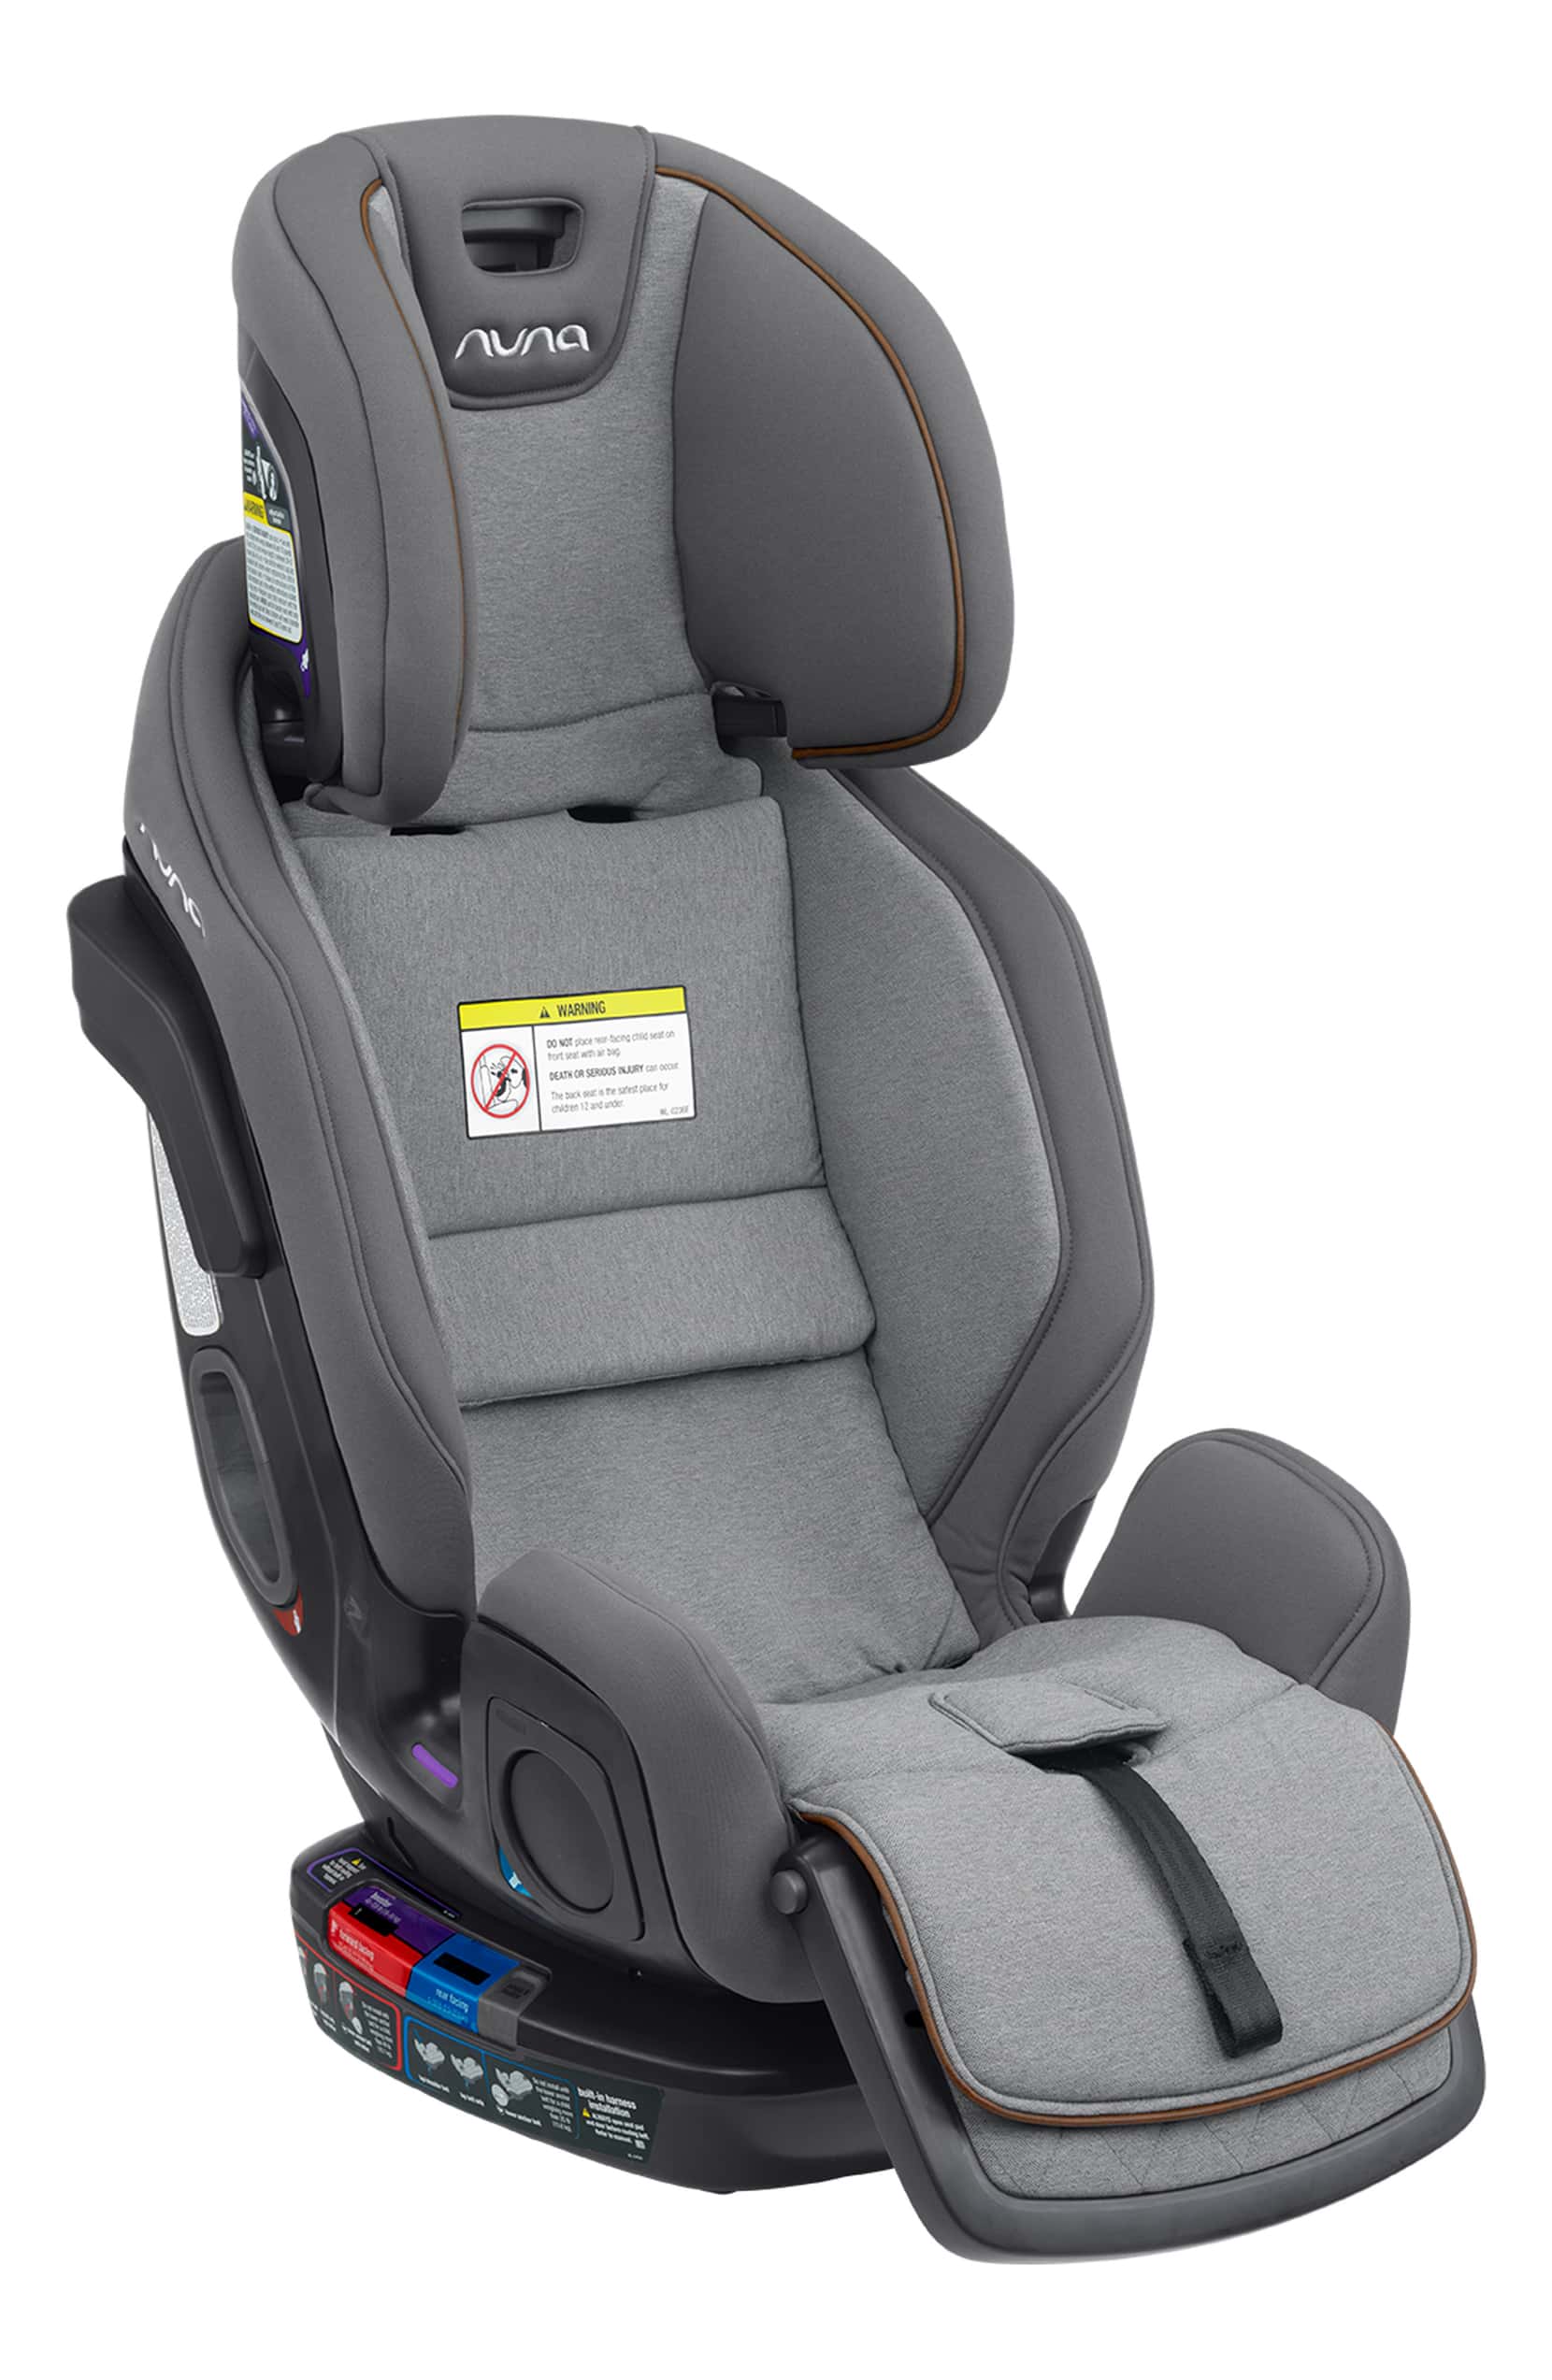 NUNA EXEC All-in-One Car Seat - Granite